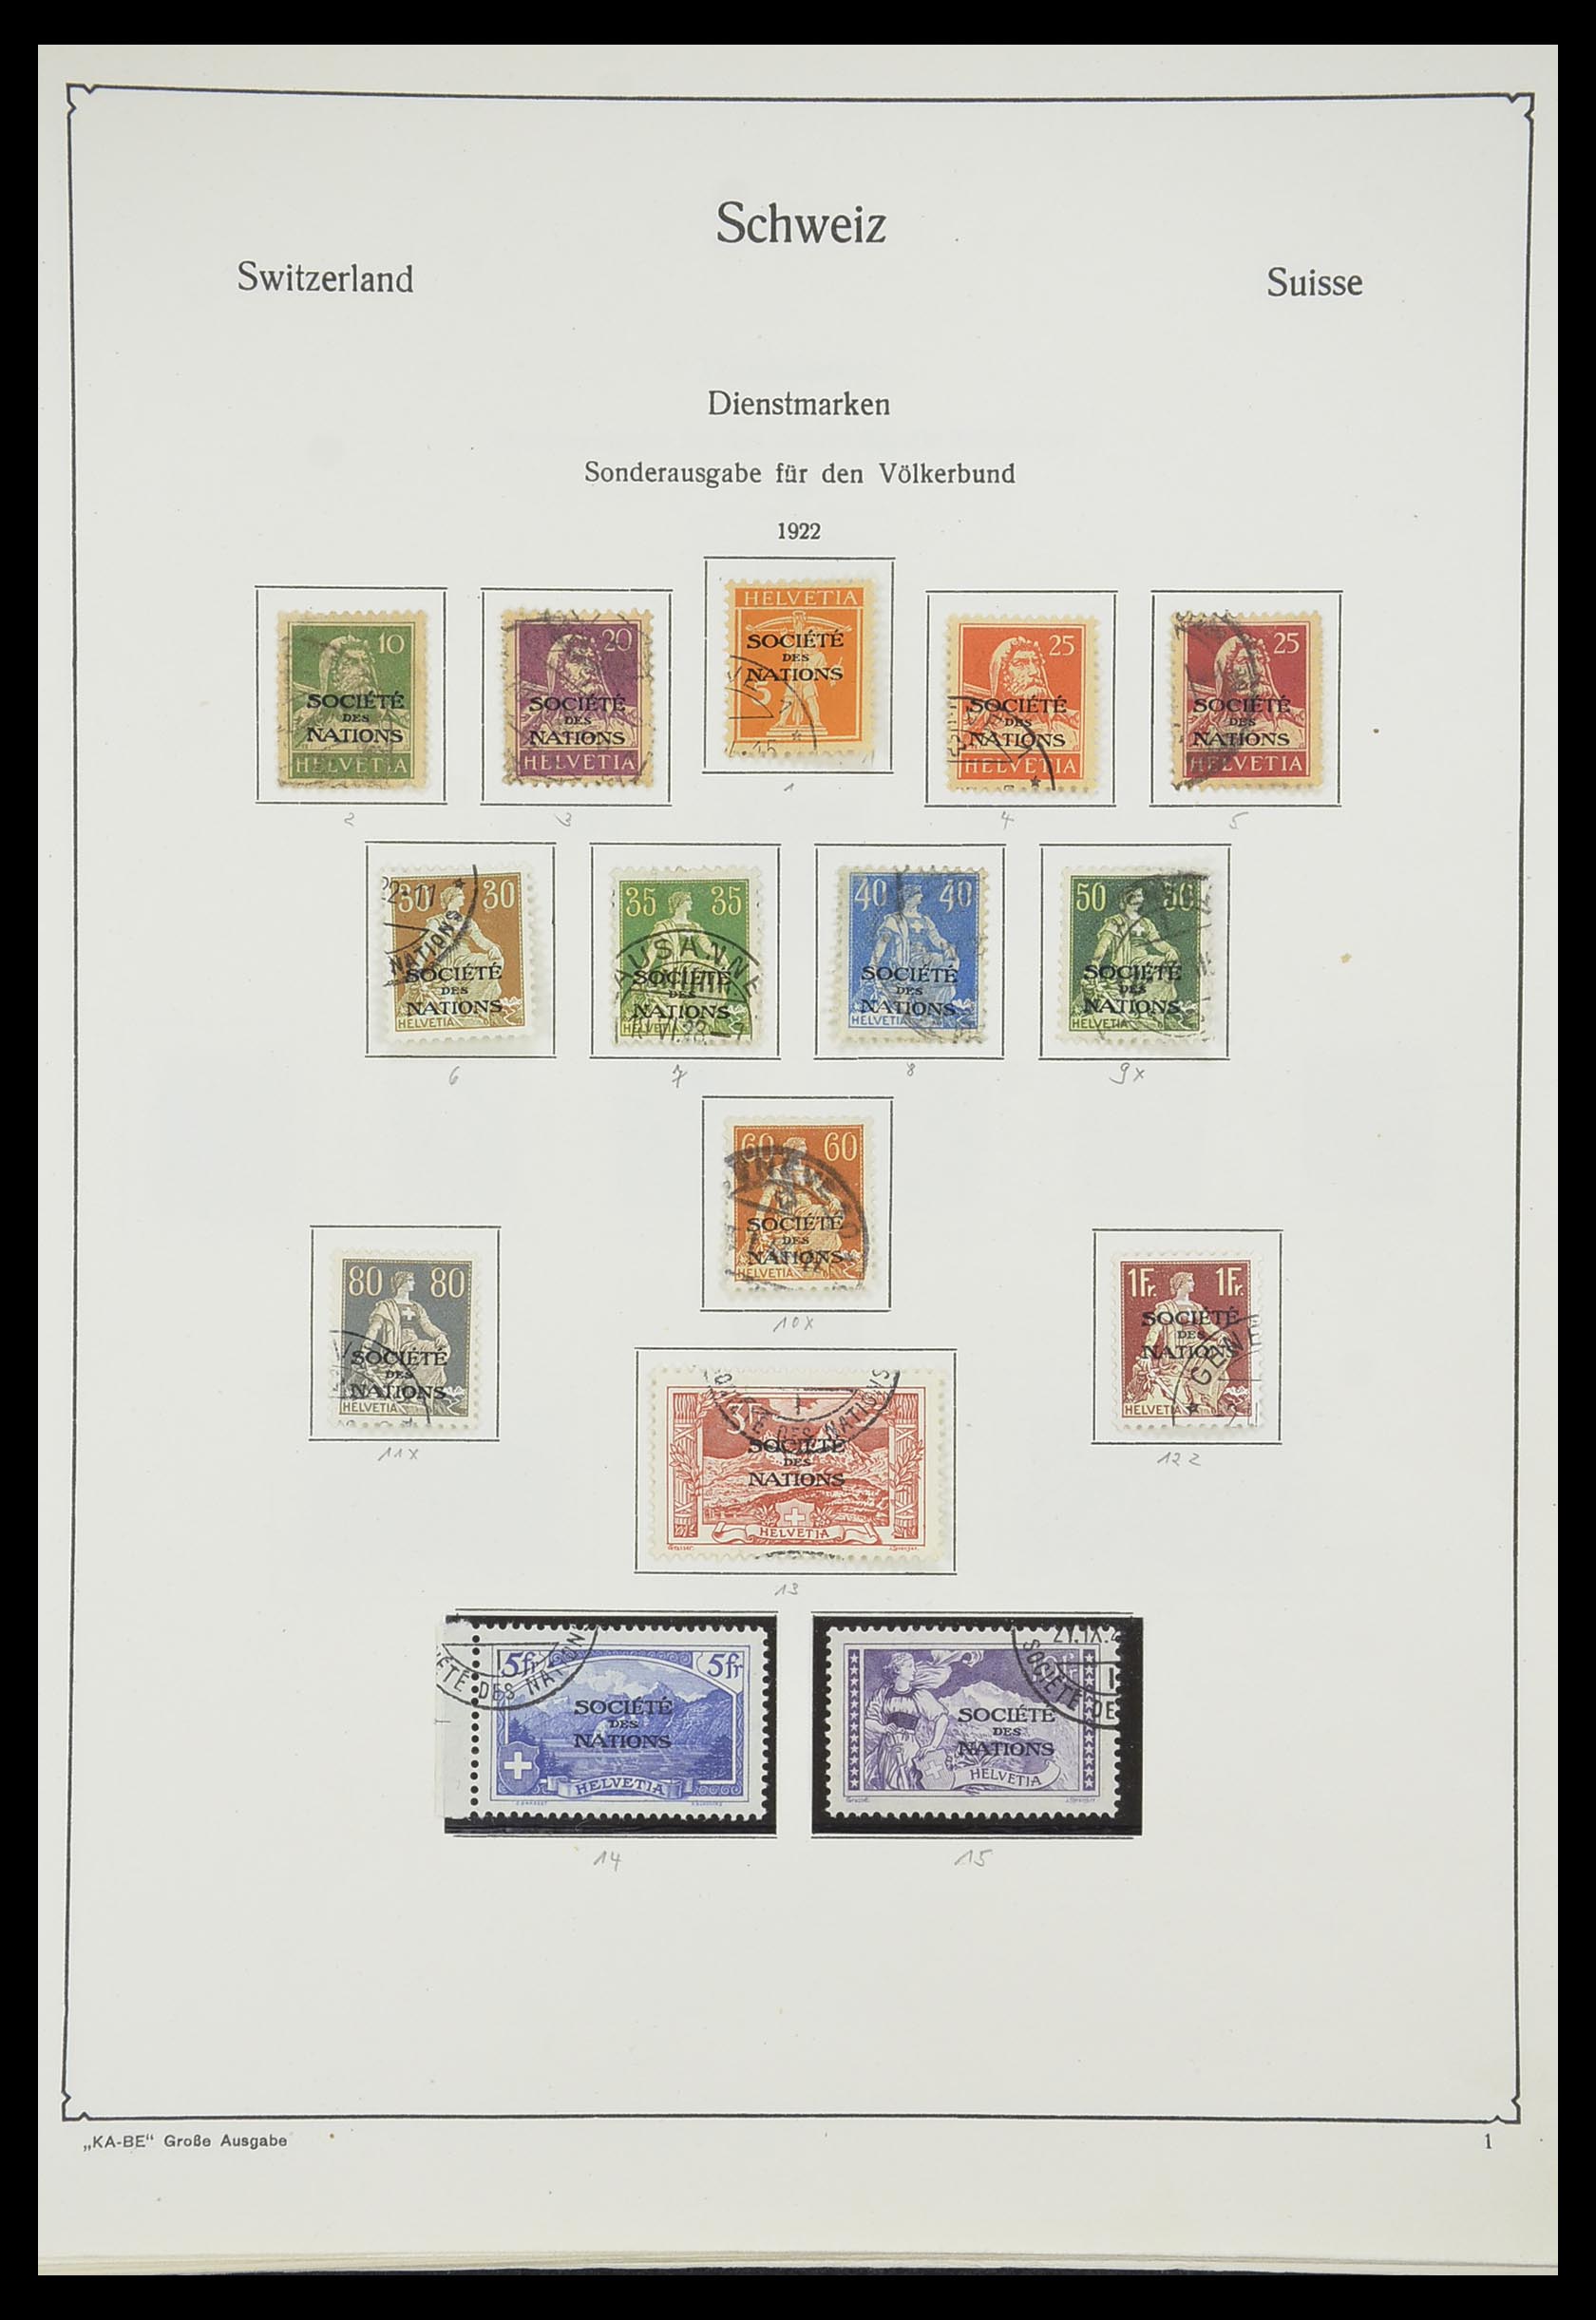 33327 001 - Stamp collection 33327 Switzerland service 1922-1989.